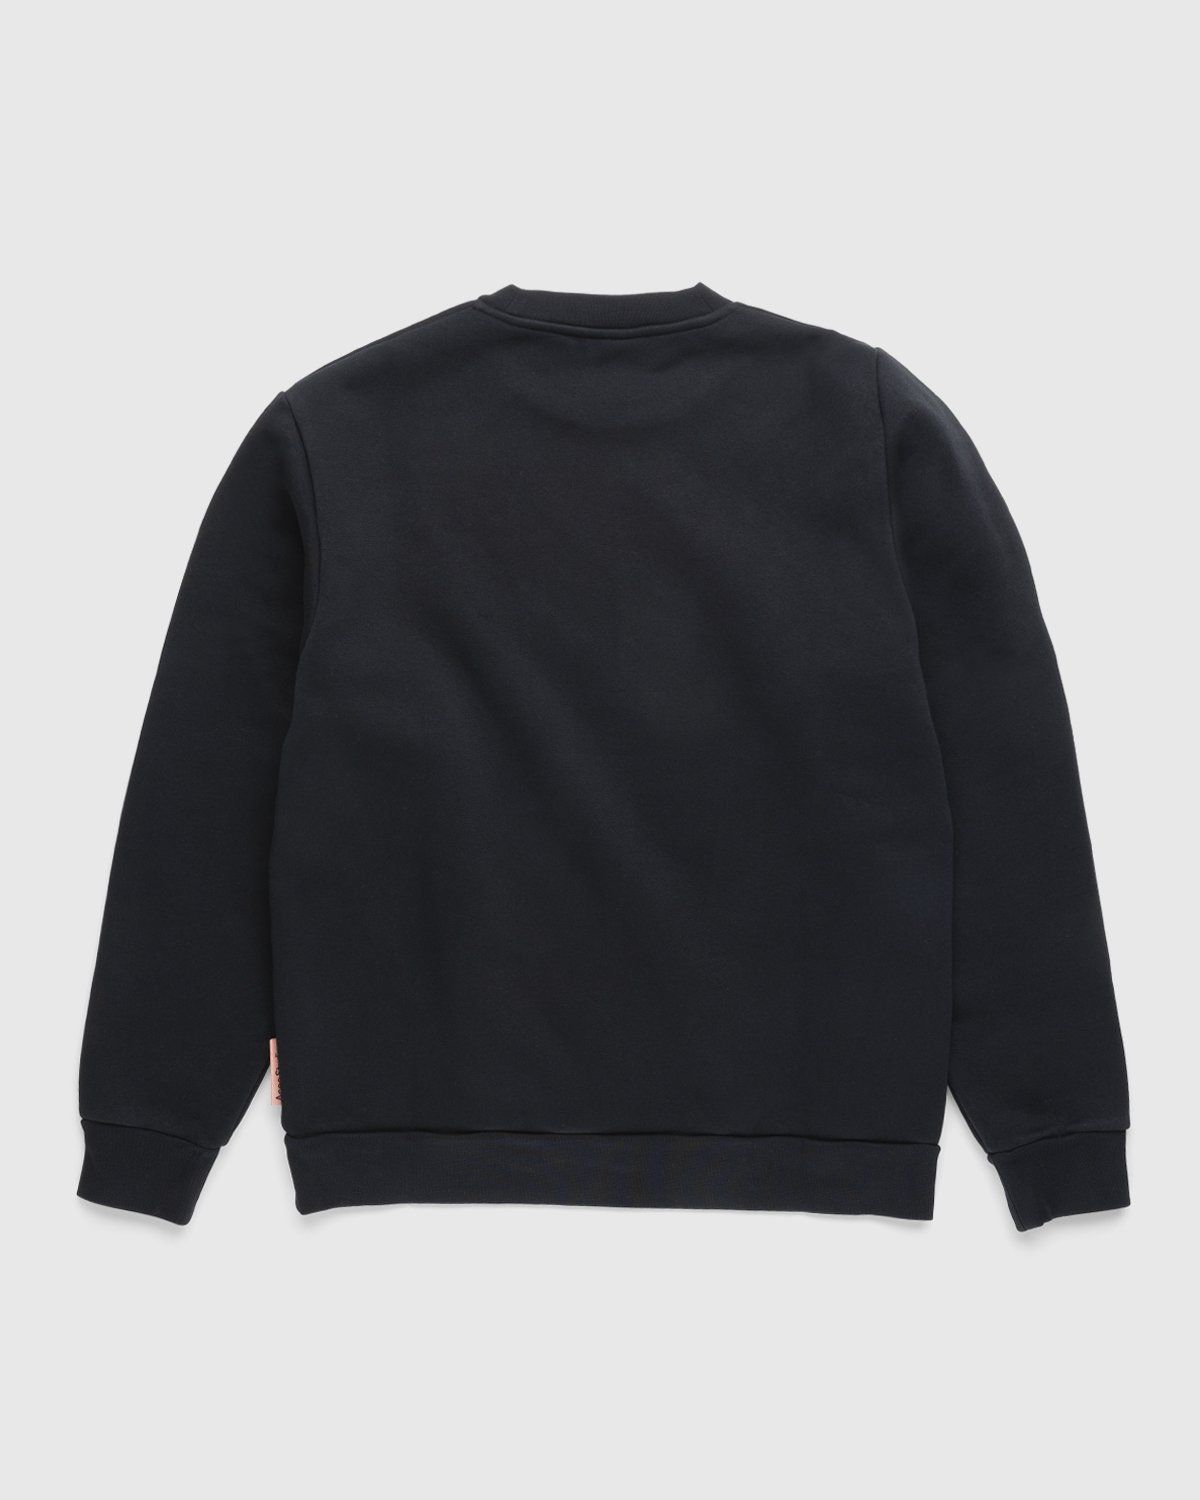 Acne Studios – Brushed Sweatshirt Black - Sweatshirts - Black - Image 2